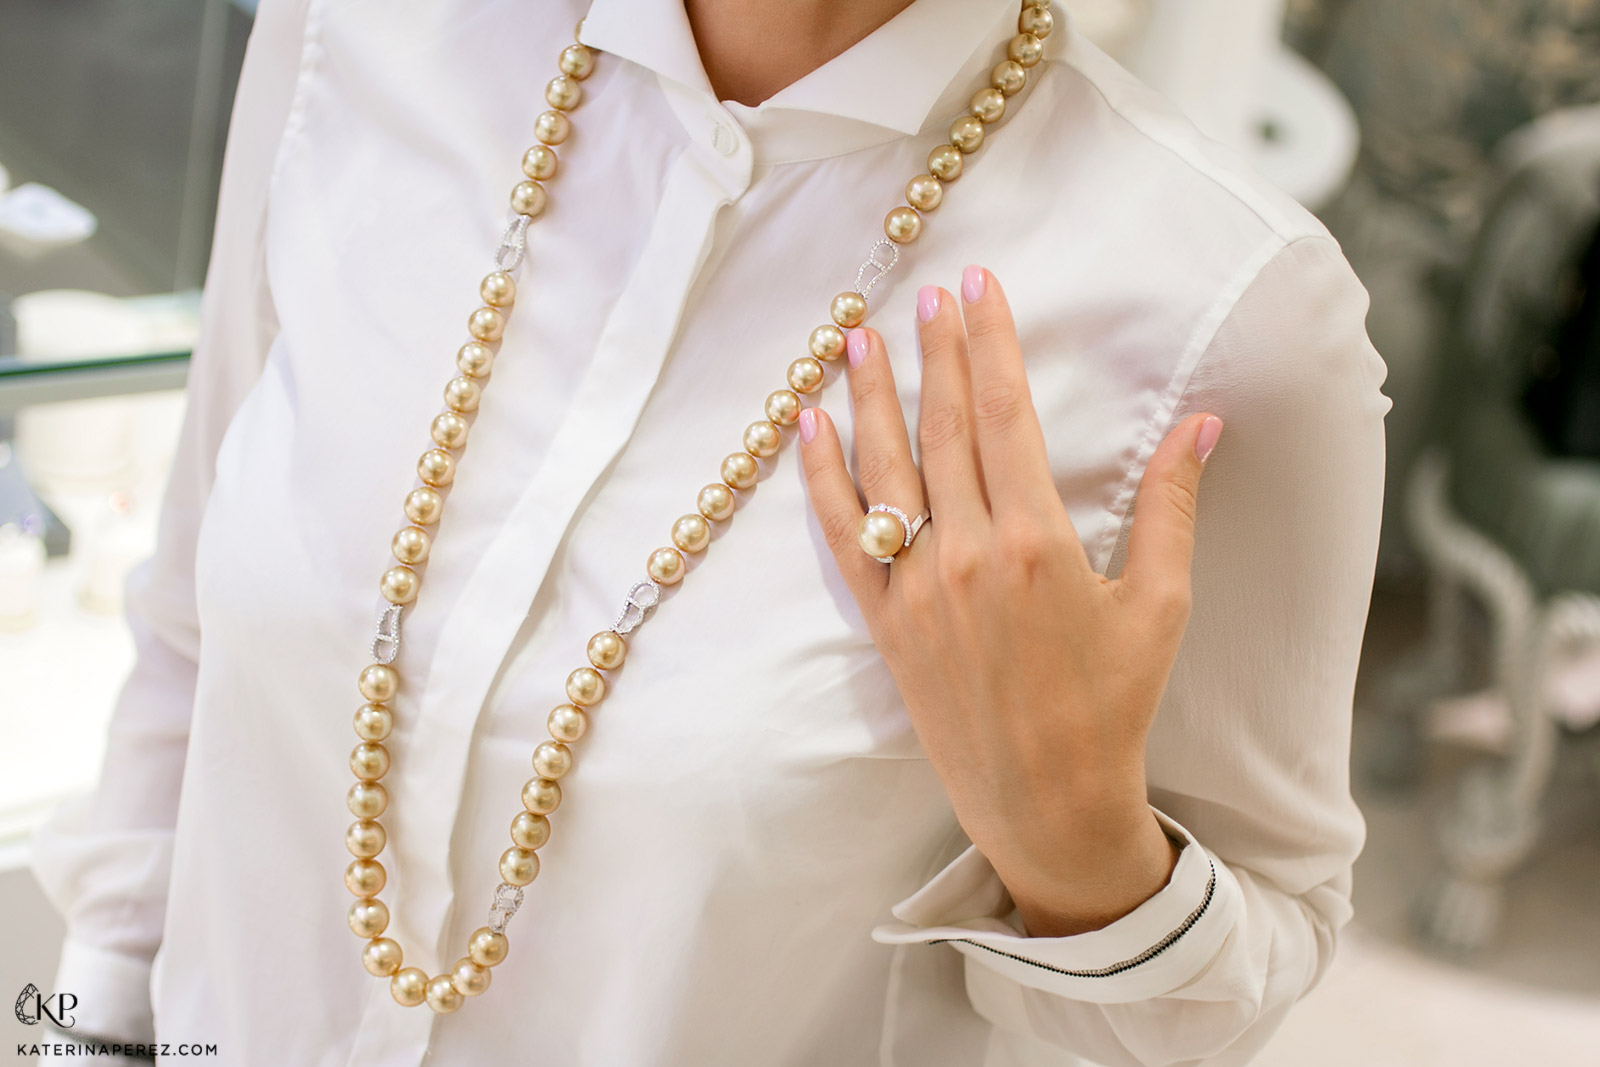 Ksenia Podnebesnaya sautoir necklace and ring with South Sea pearls and diamonds 